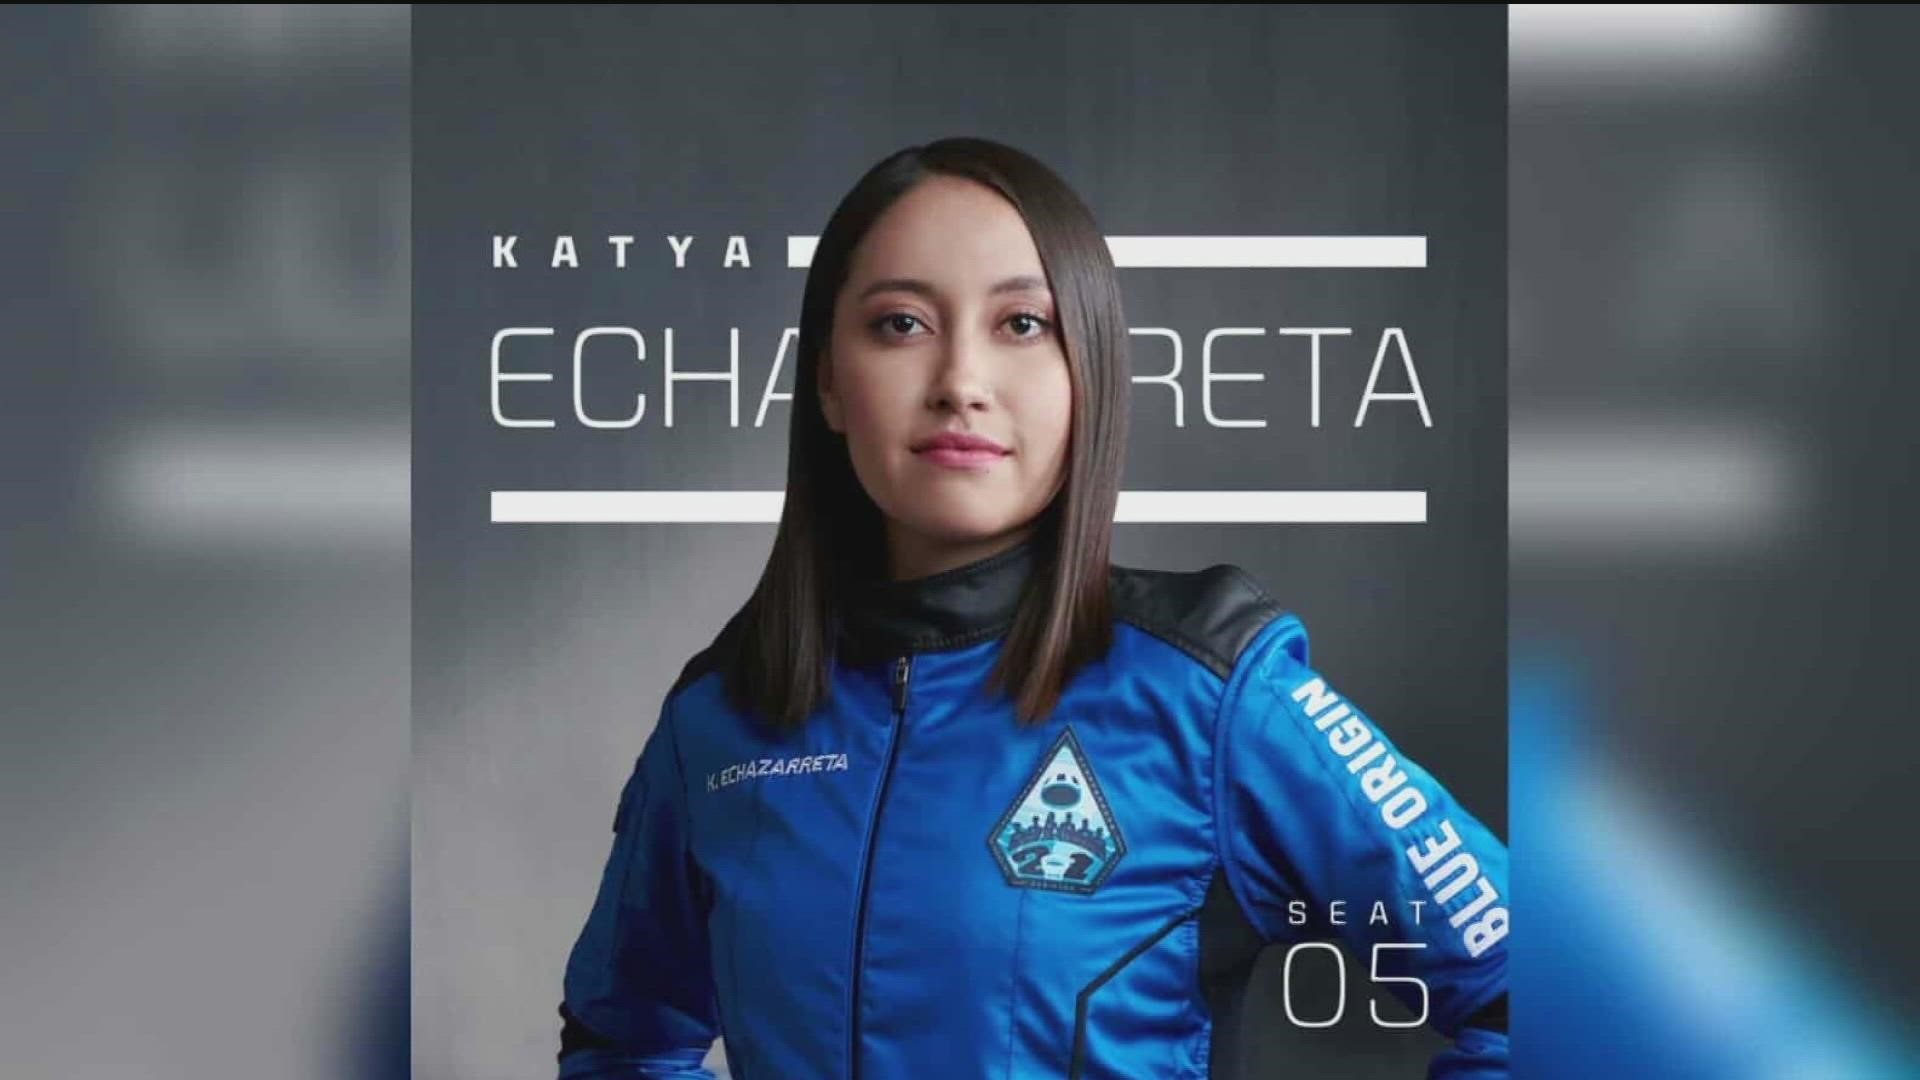 Katya Echazarreta talks about the impact of her historic flight with Blue Origin this past June.